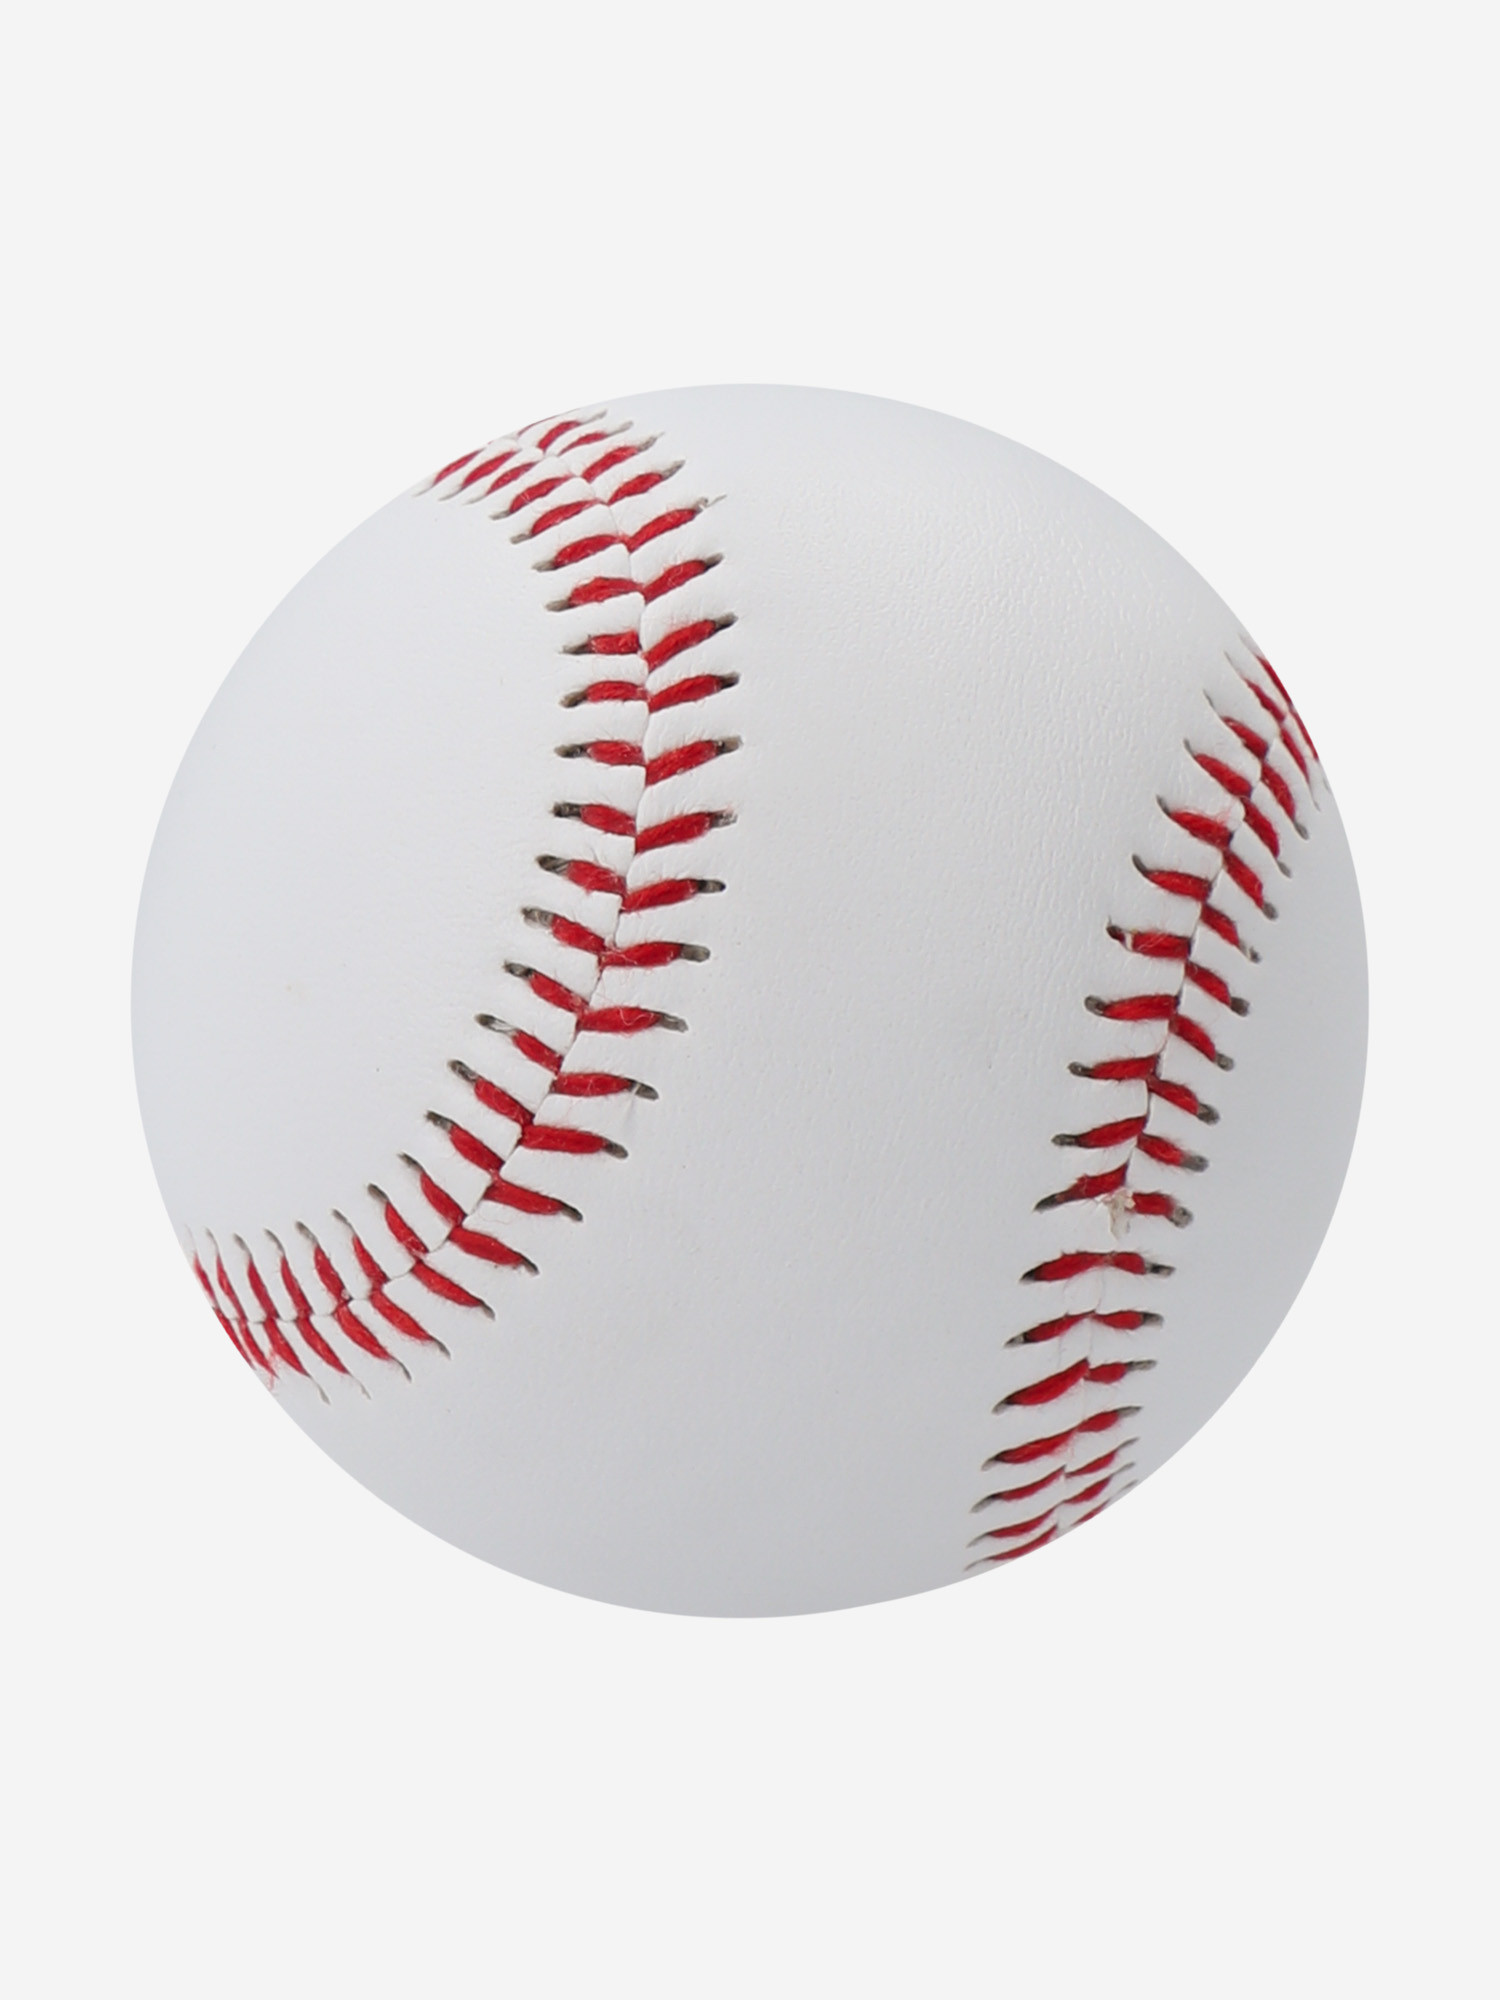 М'яч бейсбольний Denton